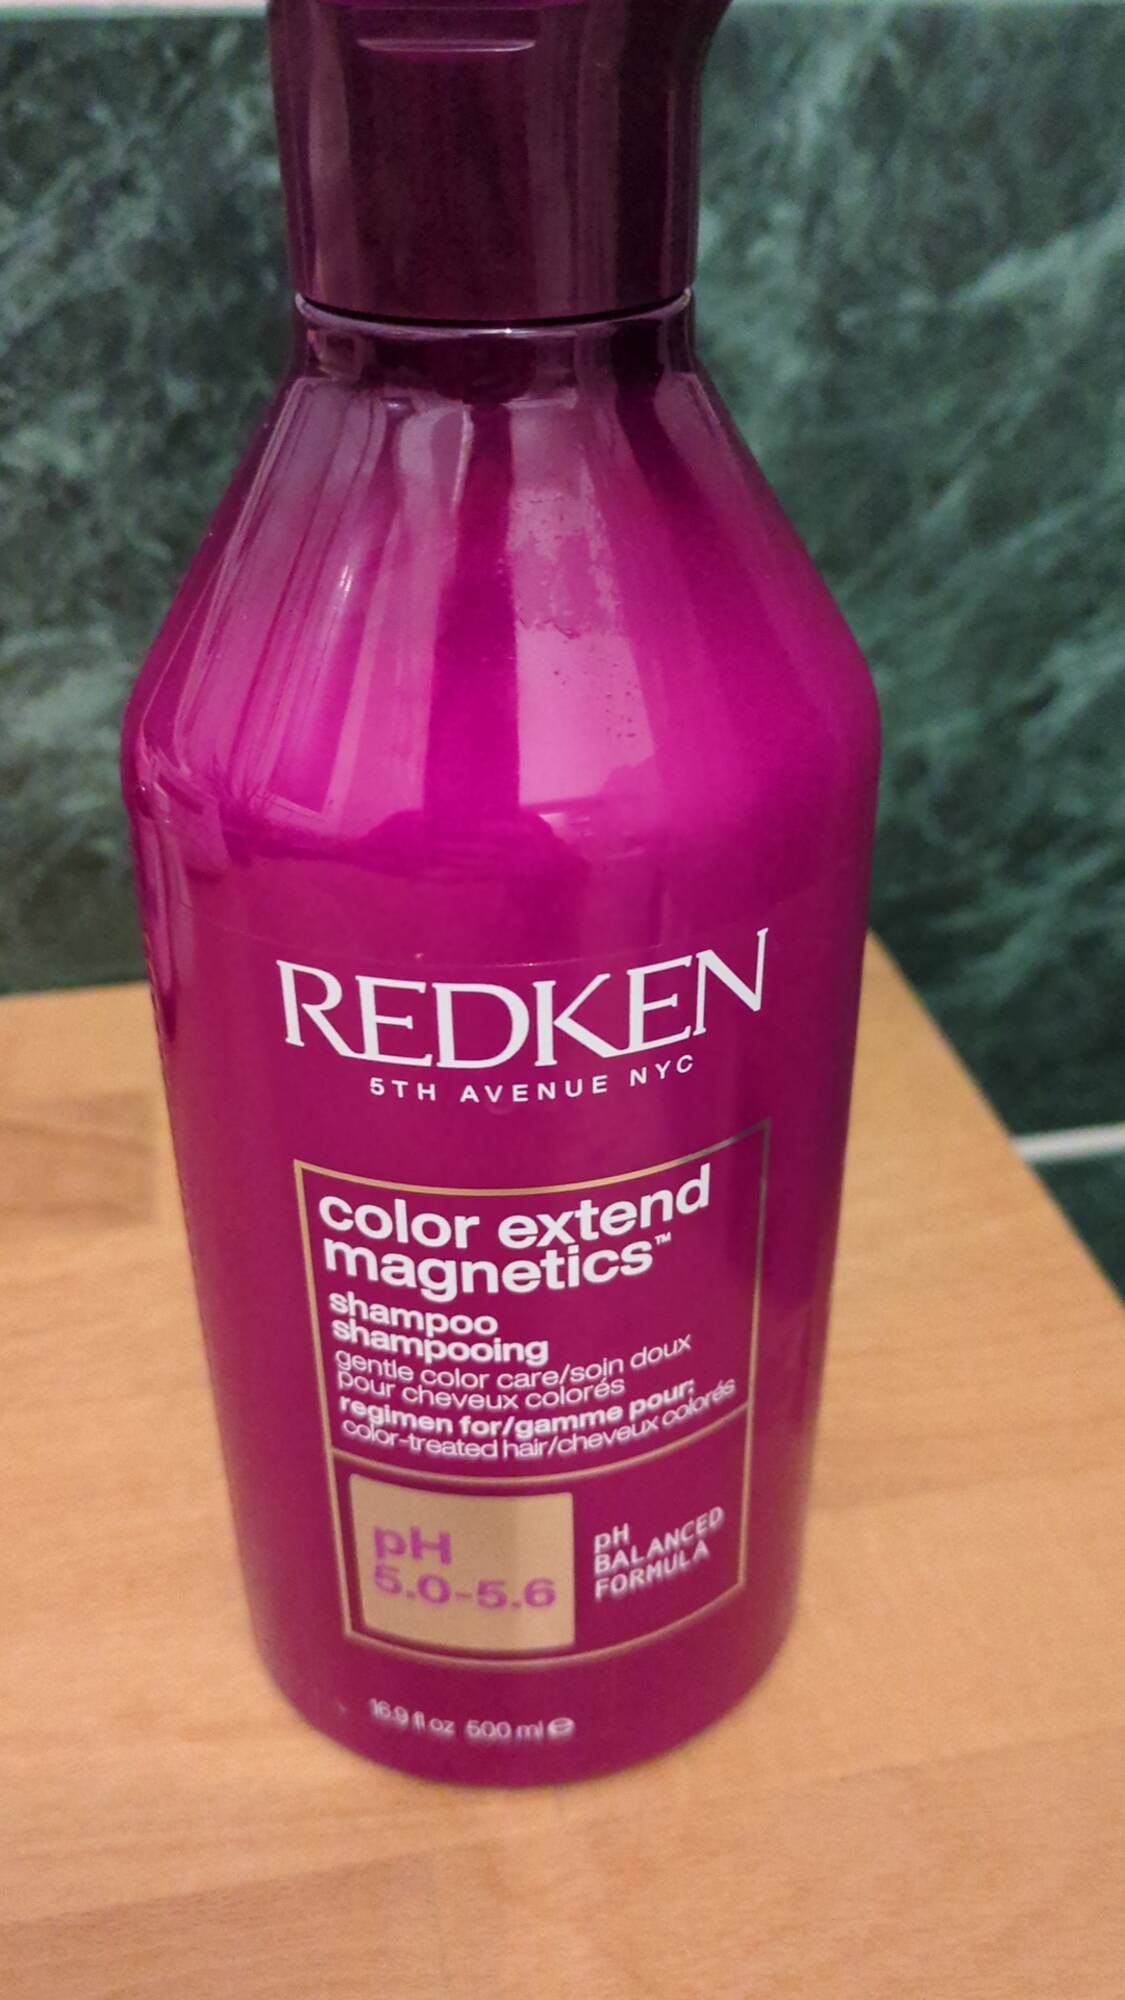 REDKEN - Color extend magnetics - Shampooing pH 5.0-5.6